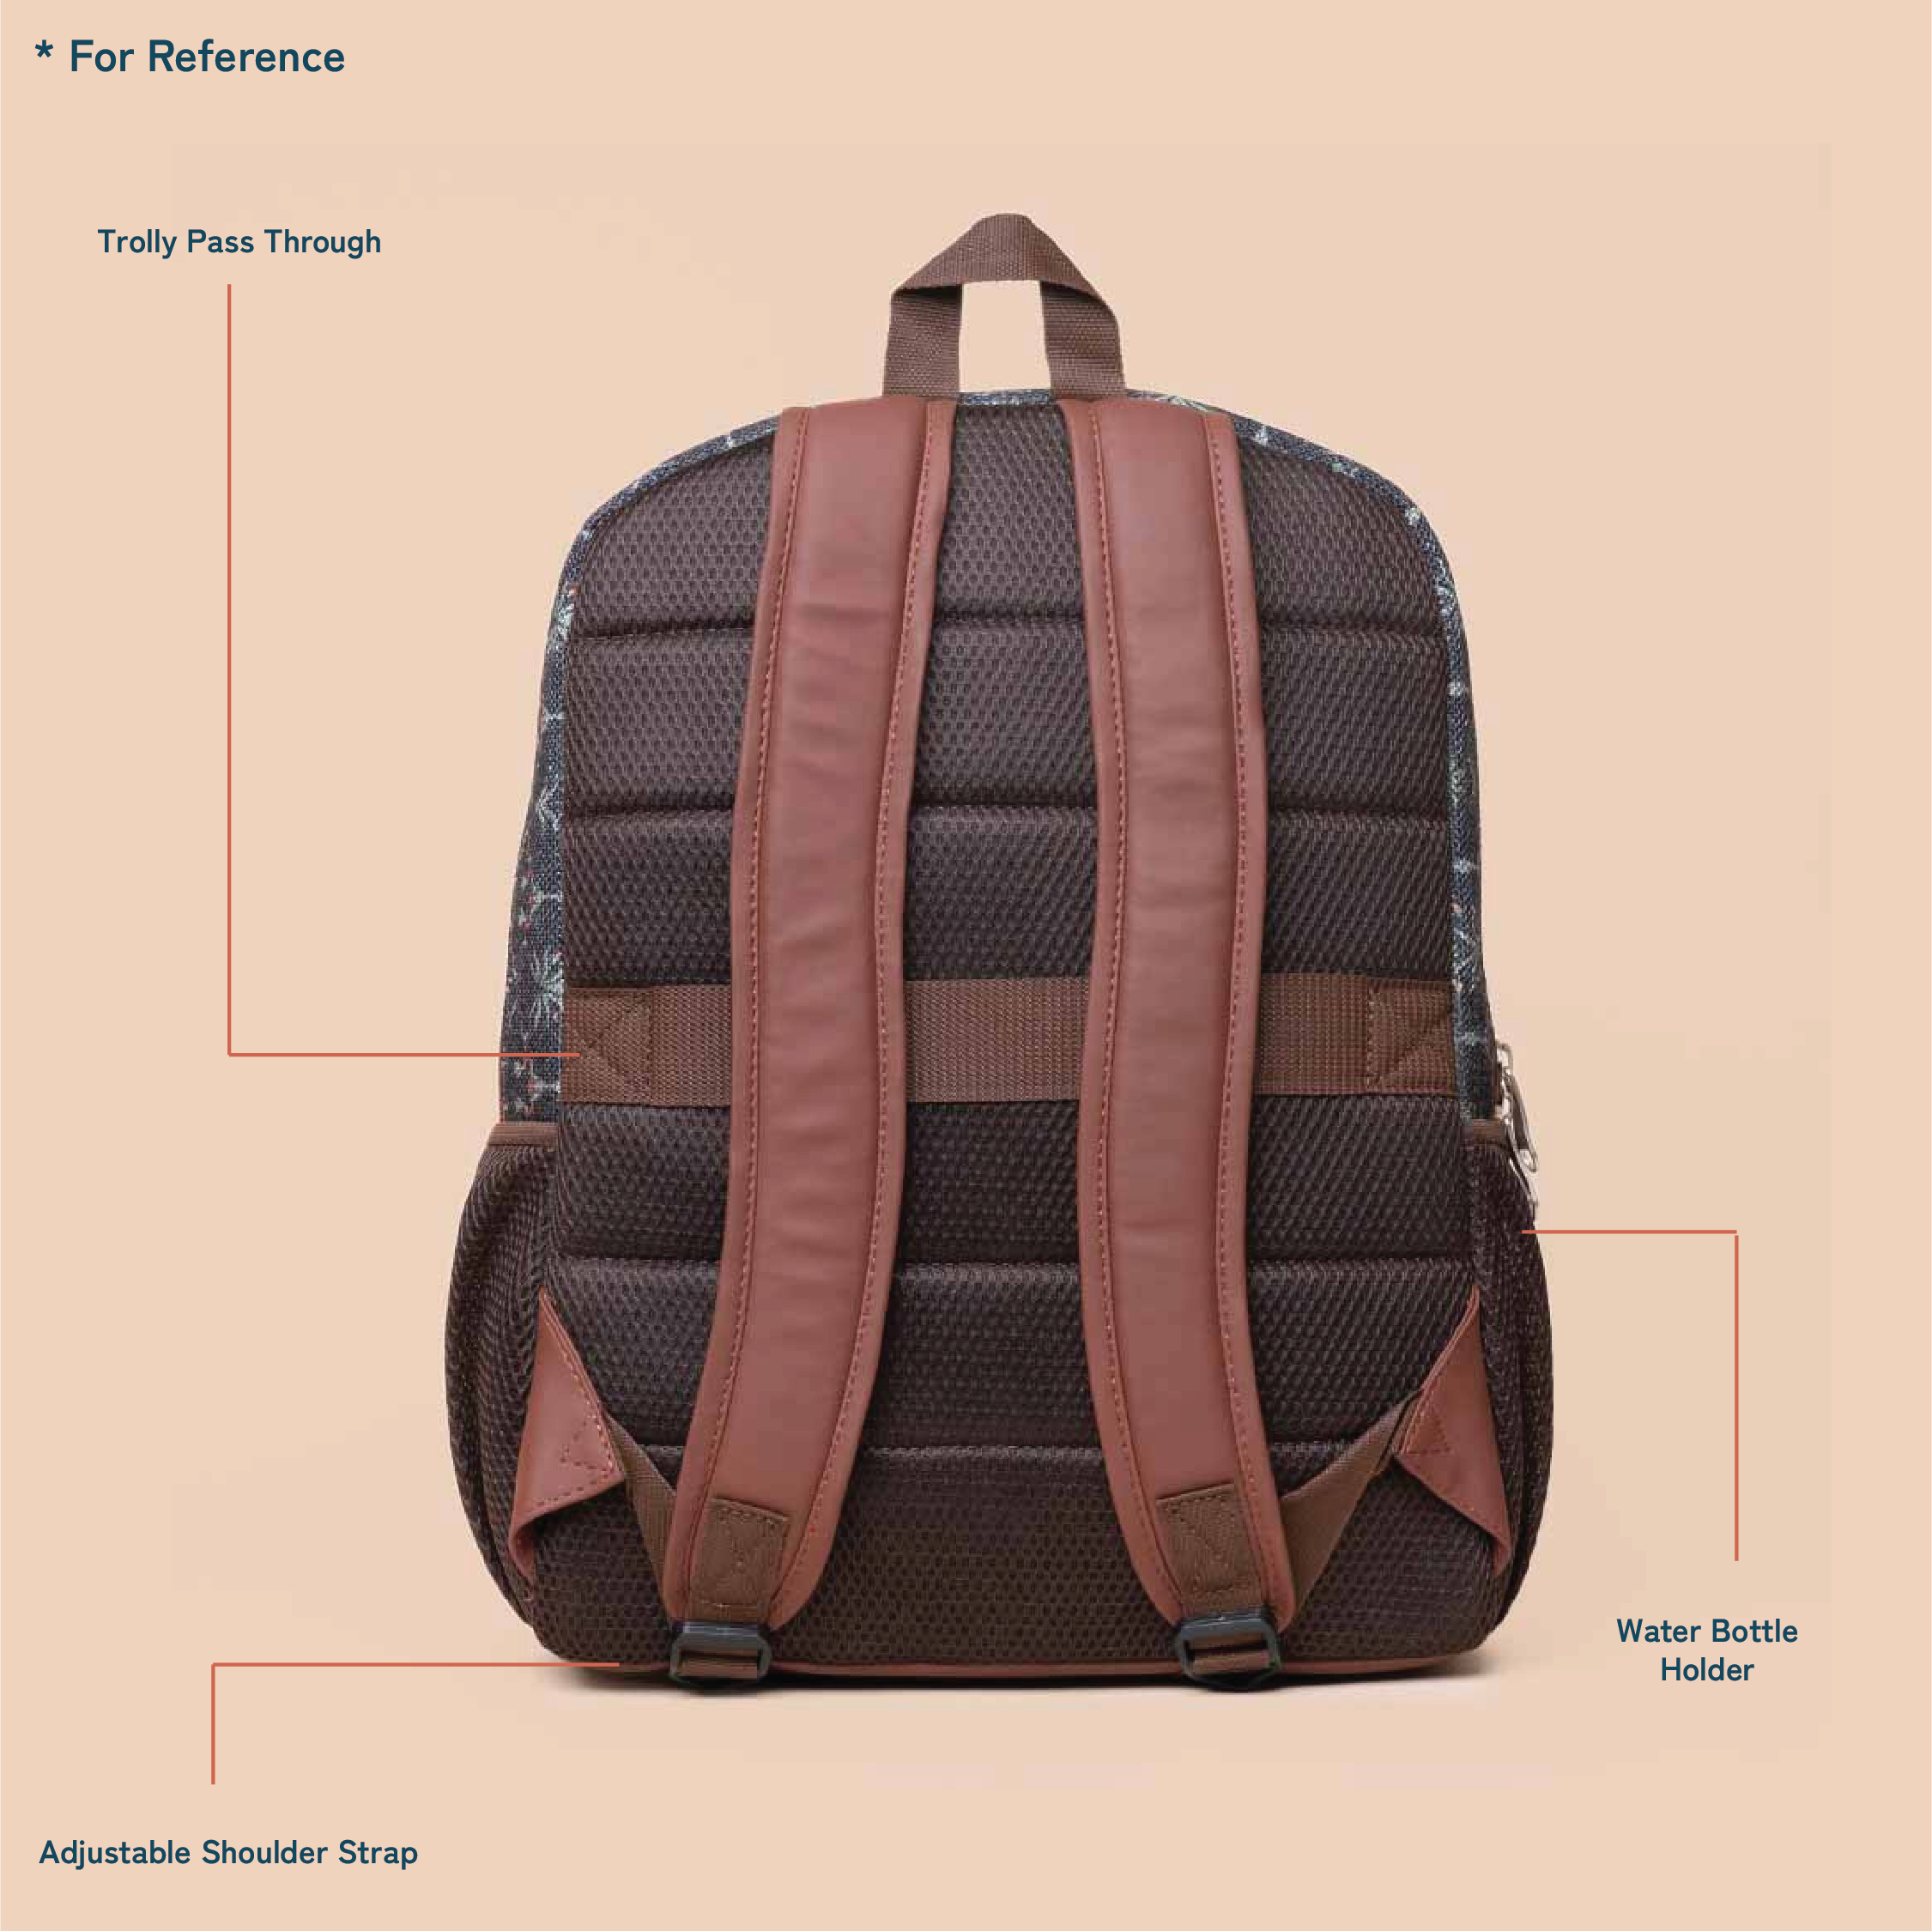 Mughal Motif Classic Backpack